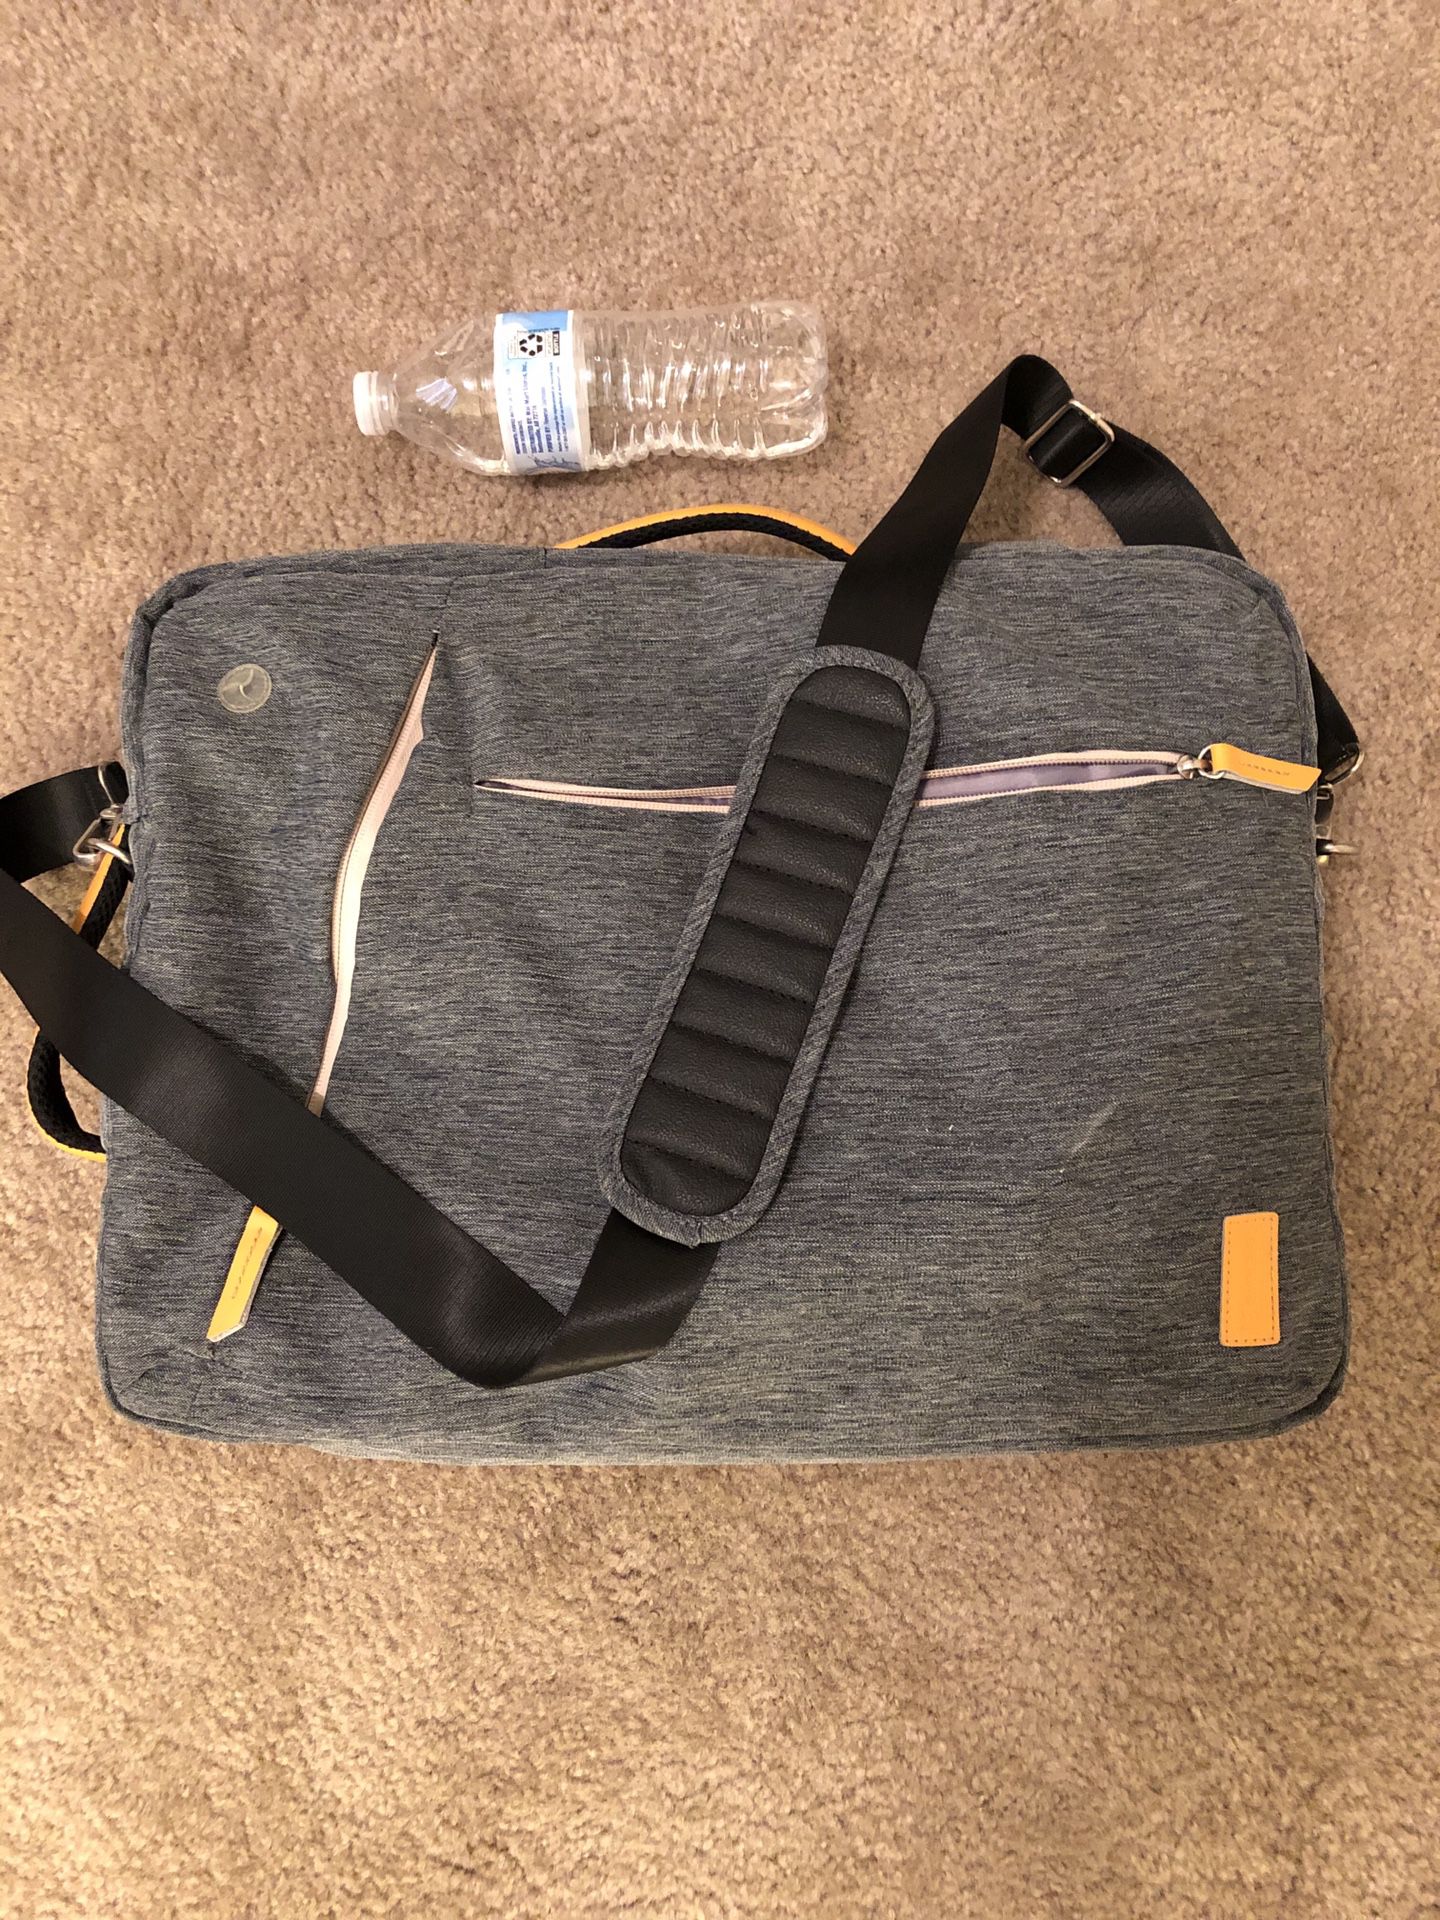 Evecase laptop backpack